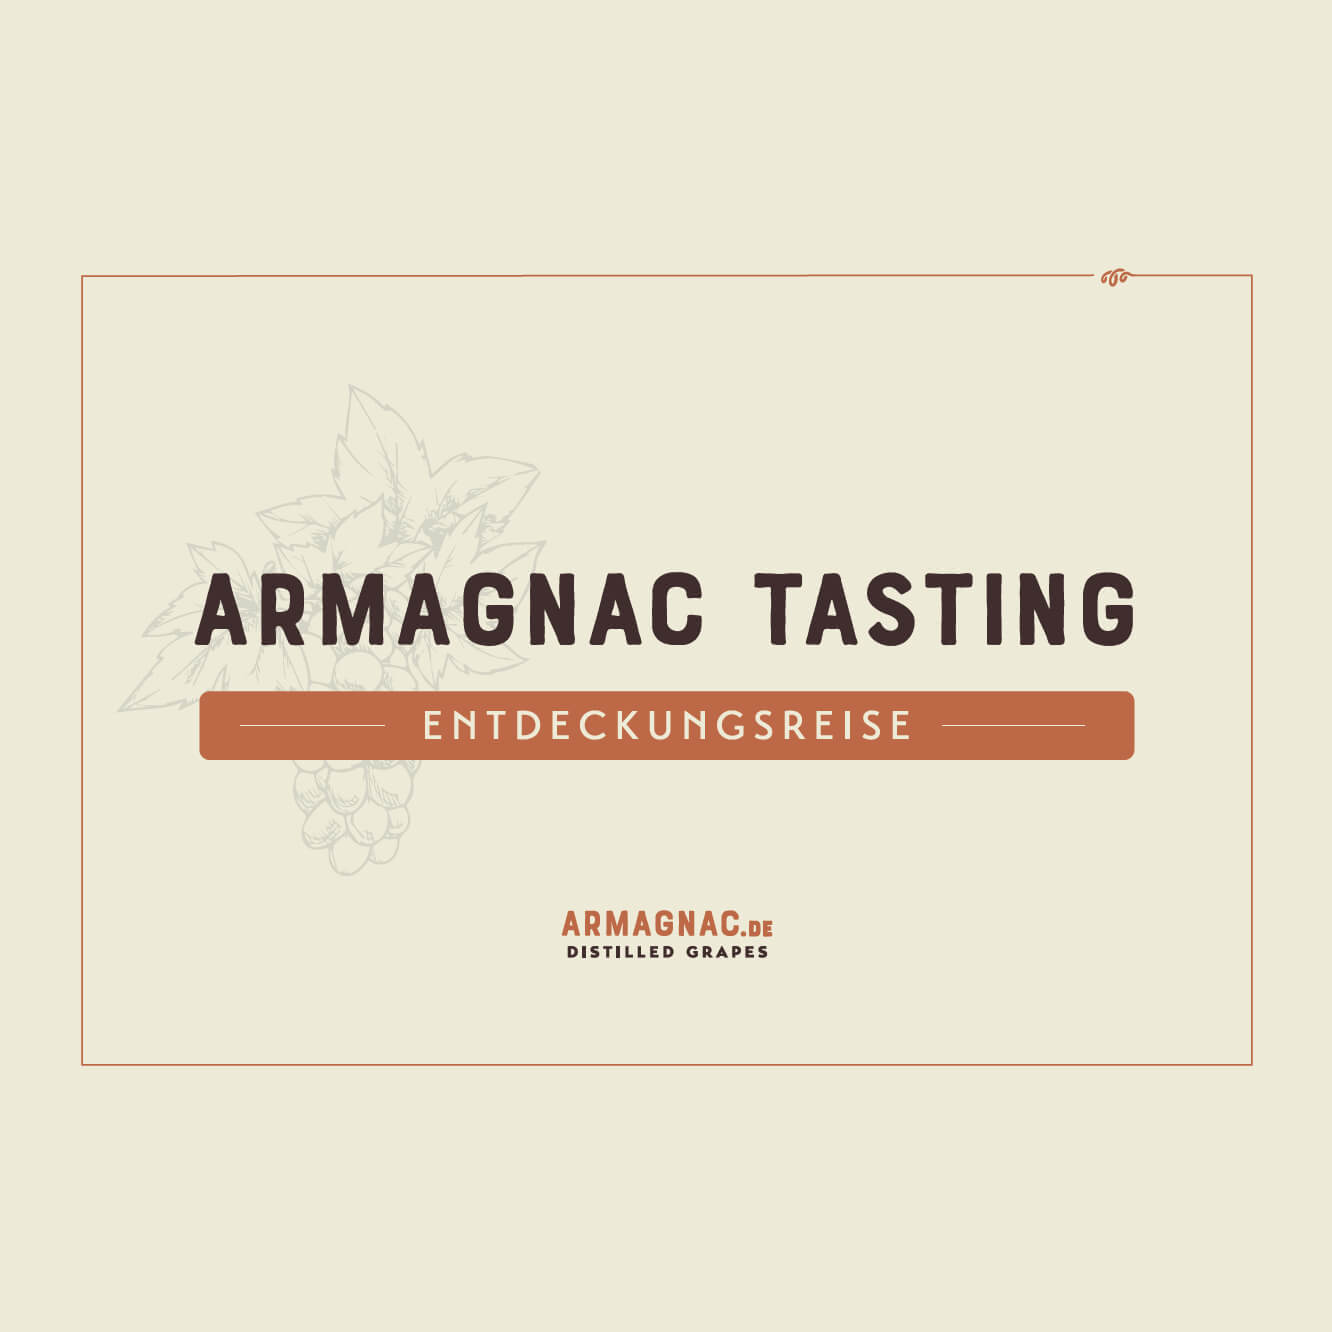 Armagnac Tasting - voyage of discovery